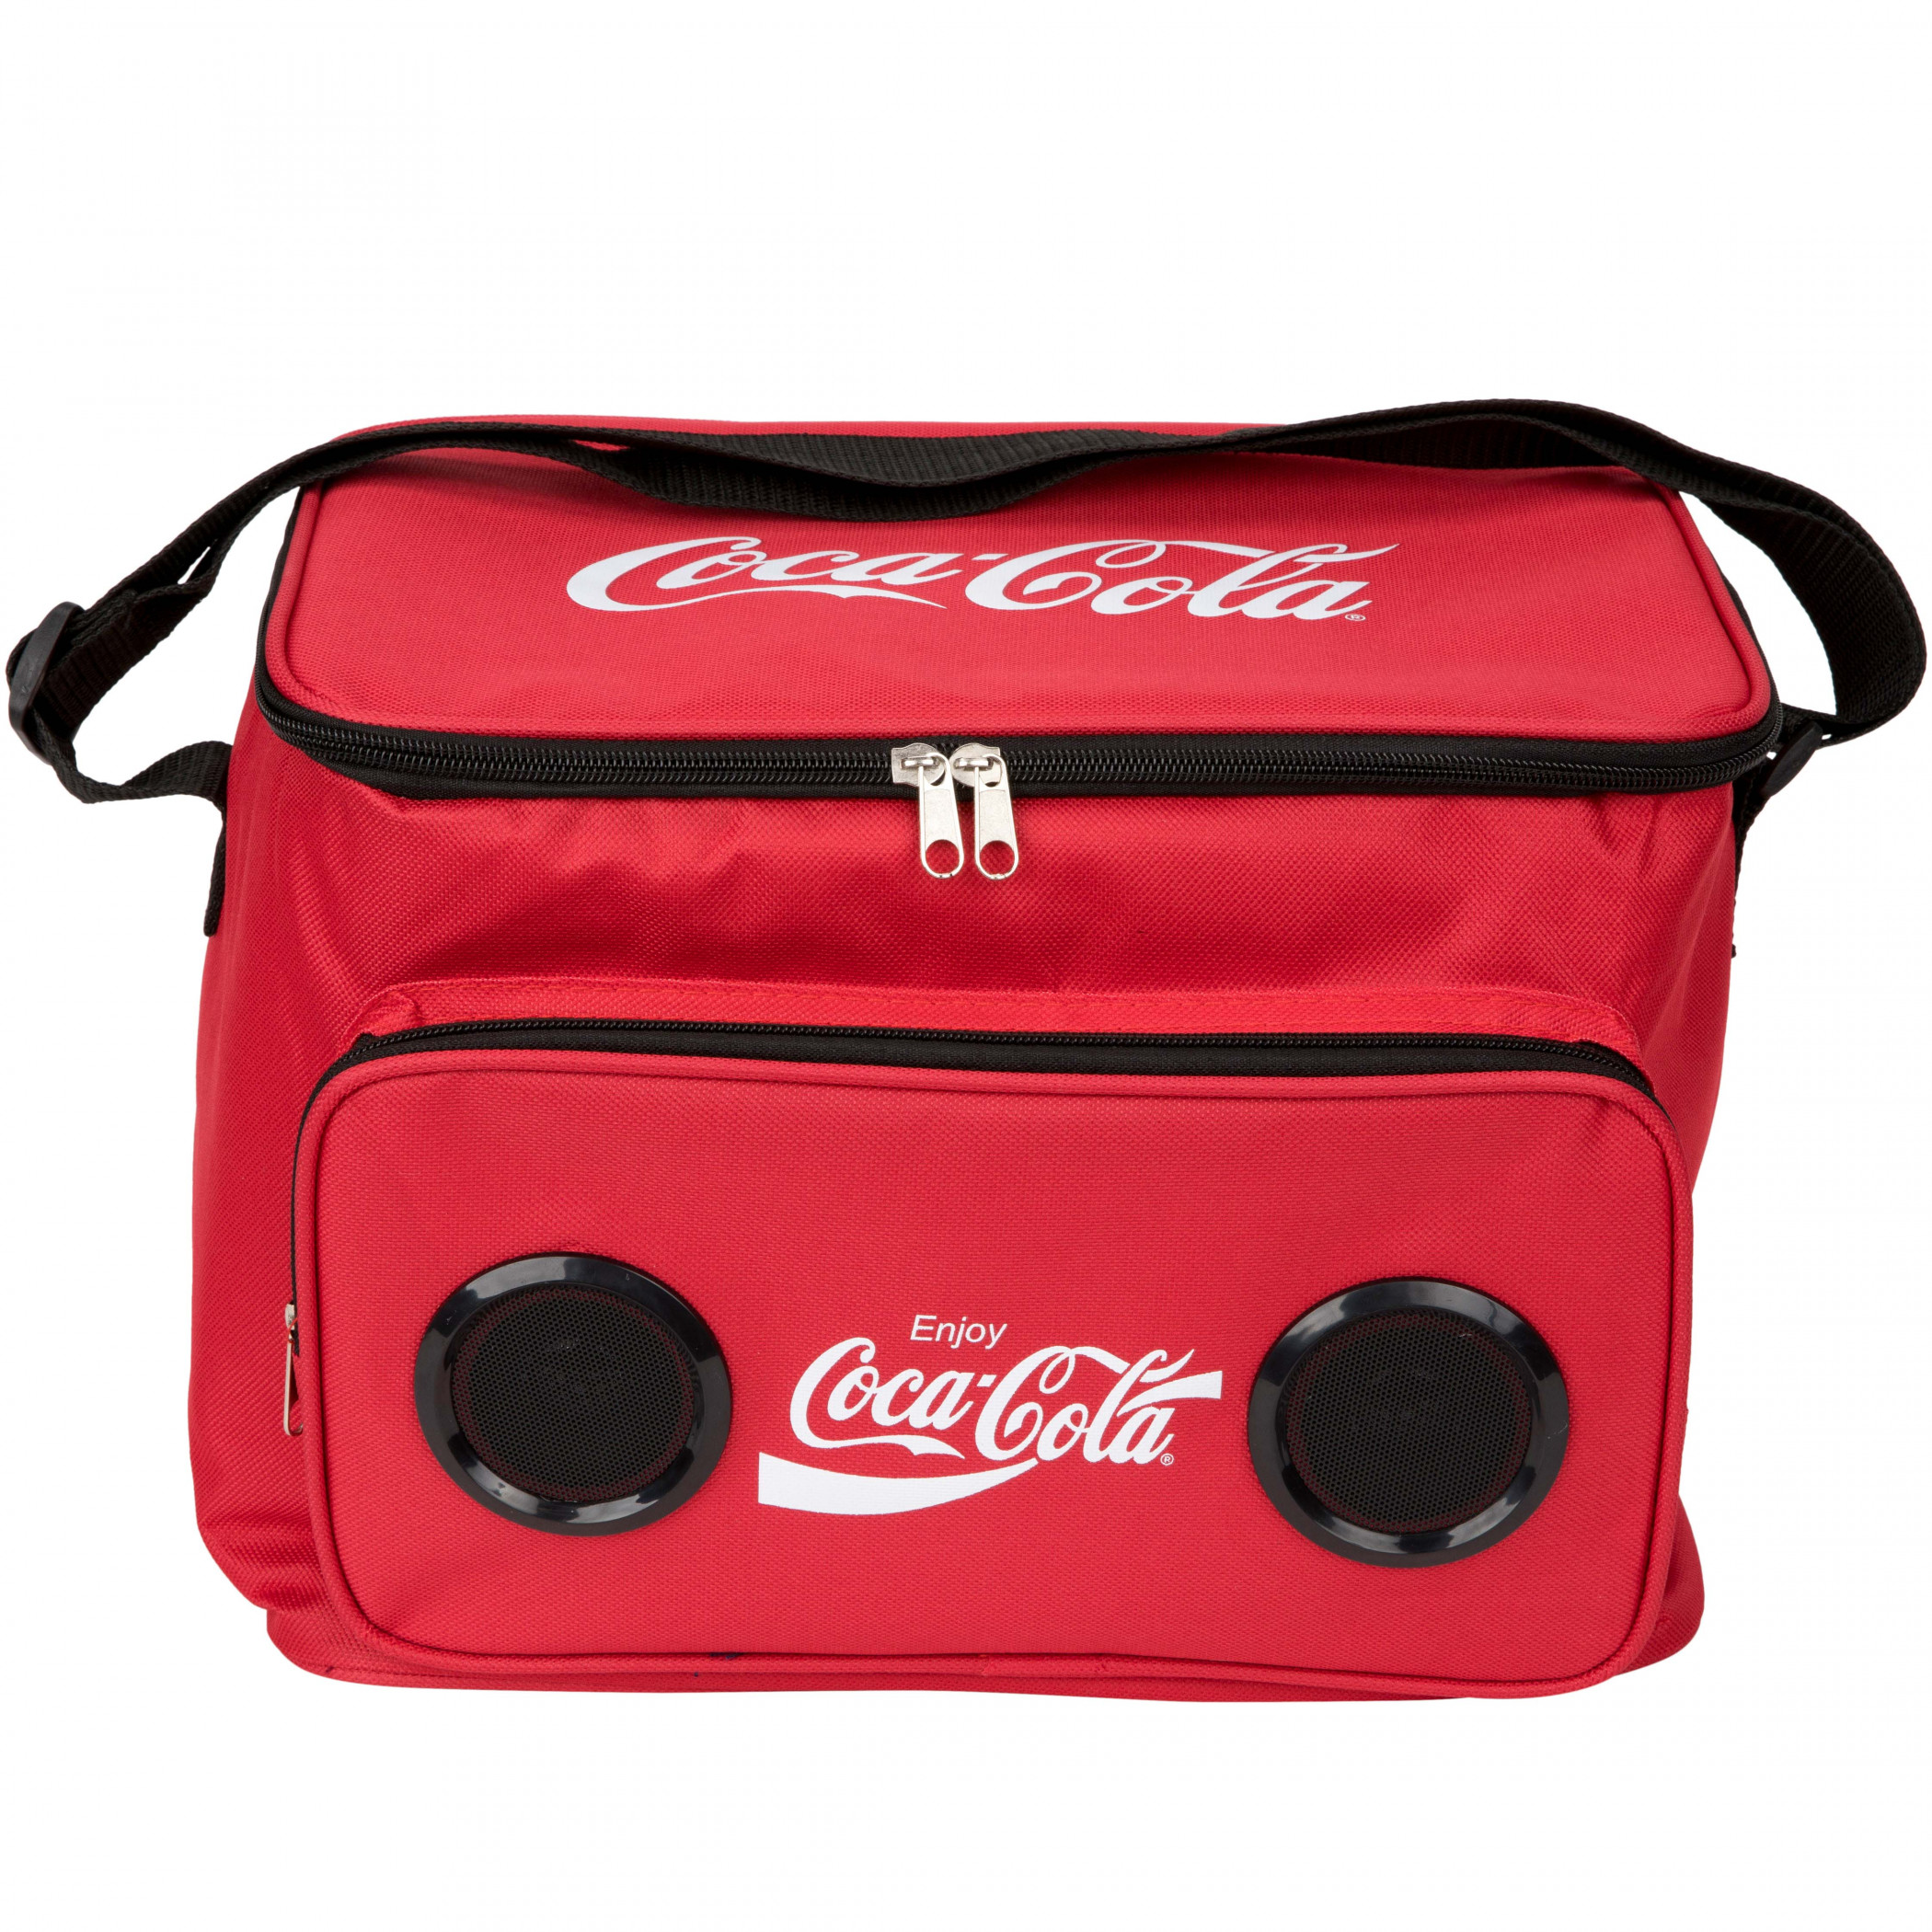 Coca-Cola Cooler Bag with Built in Bluetooth Speaker